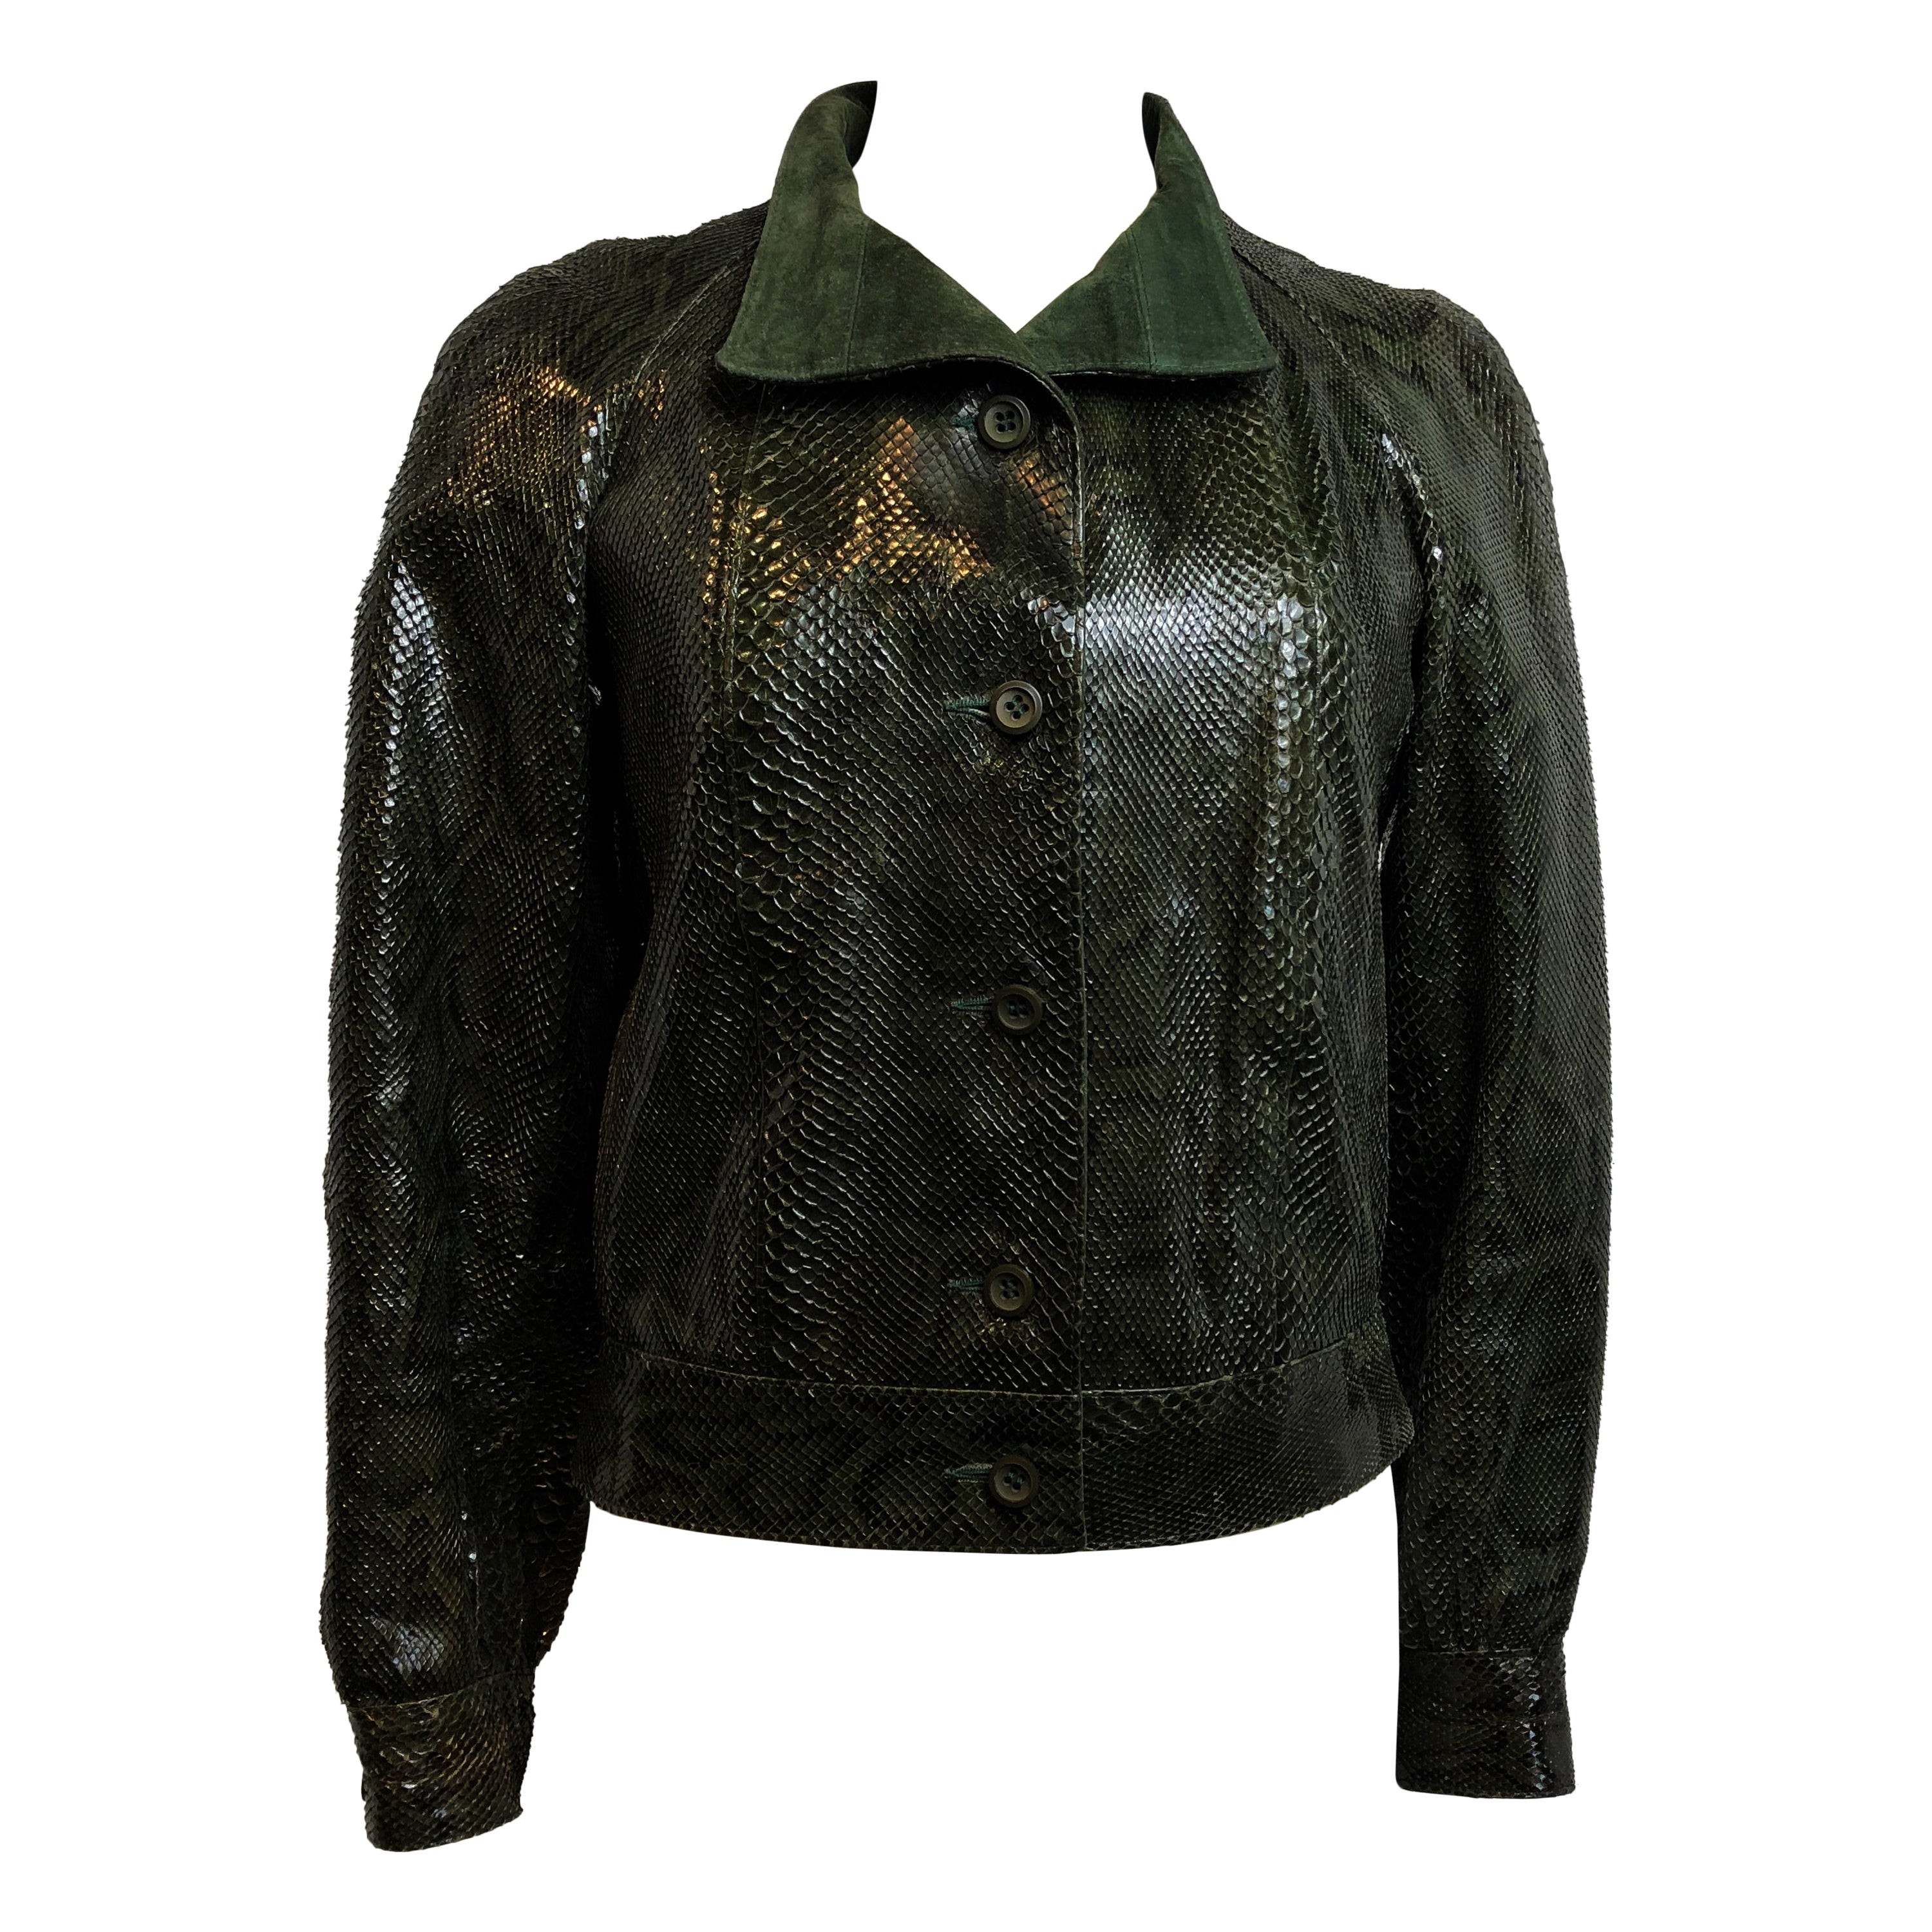 Lanvin reptile leather jacket